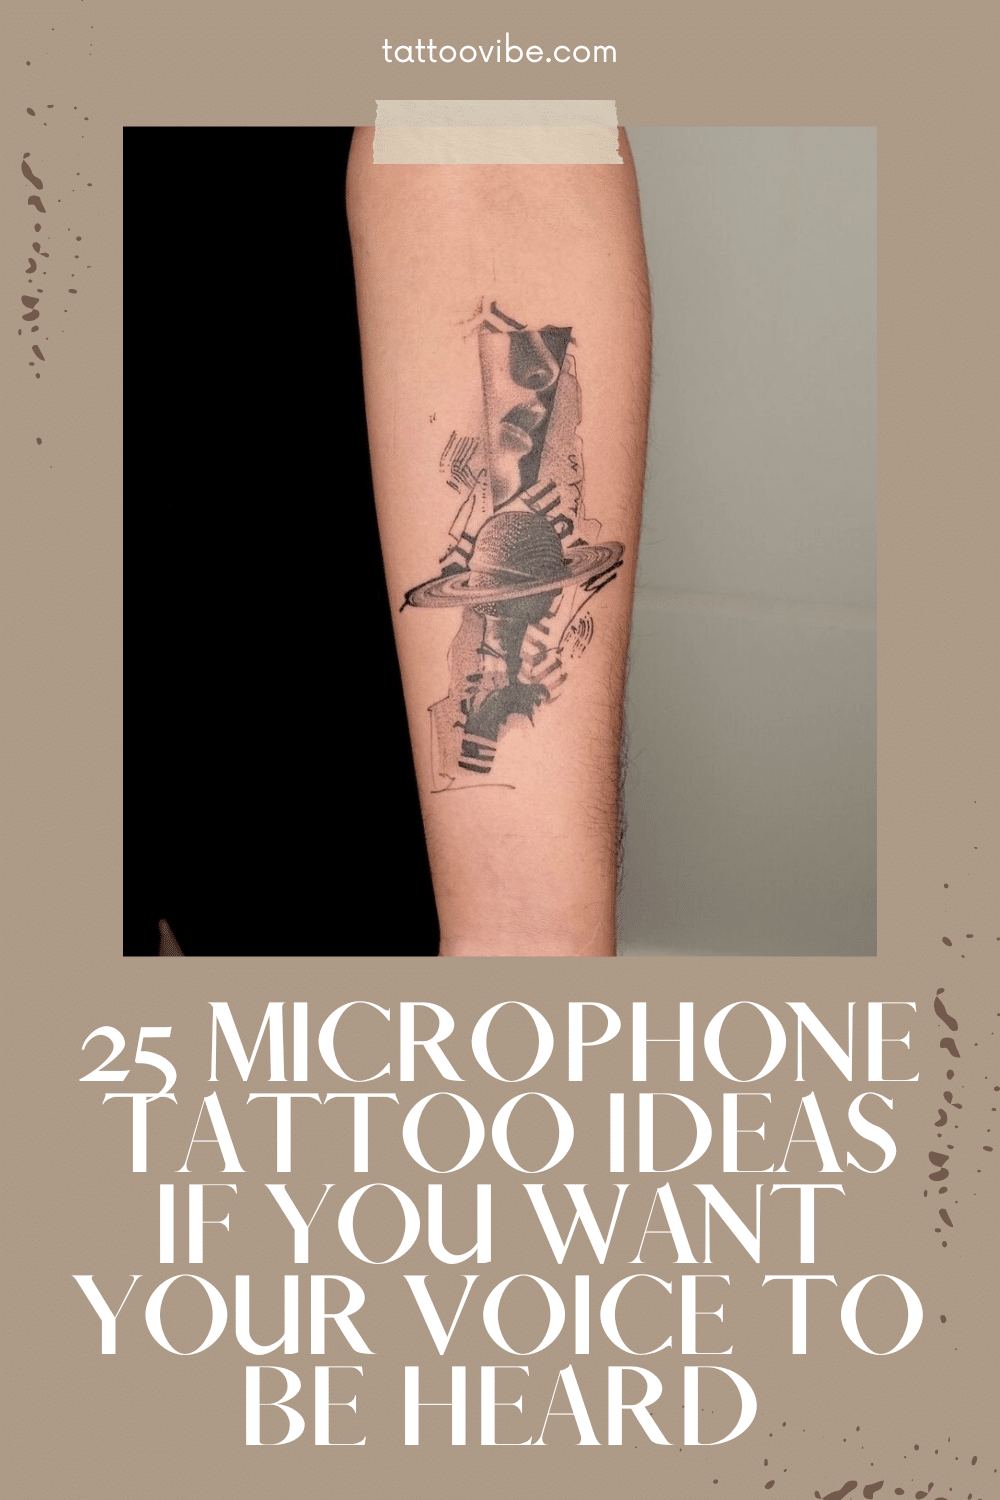 25 ideas para tatuarte un micrófono si quieres que se oiga tu voz